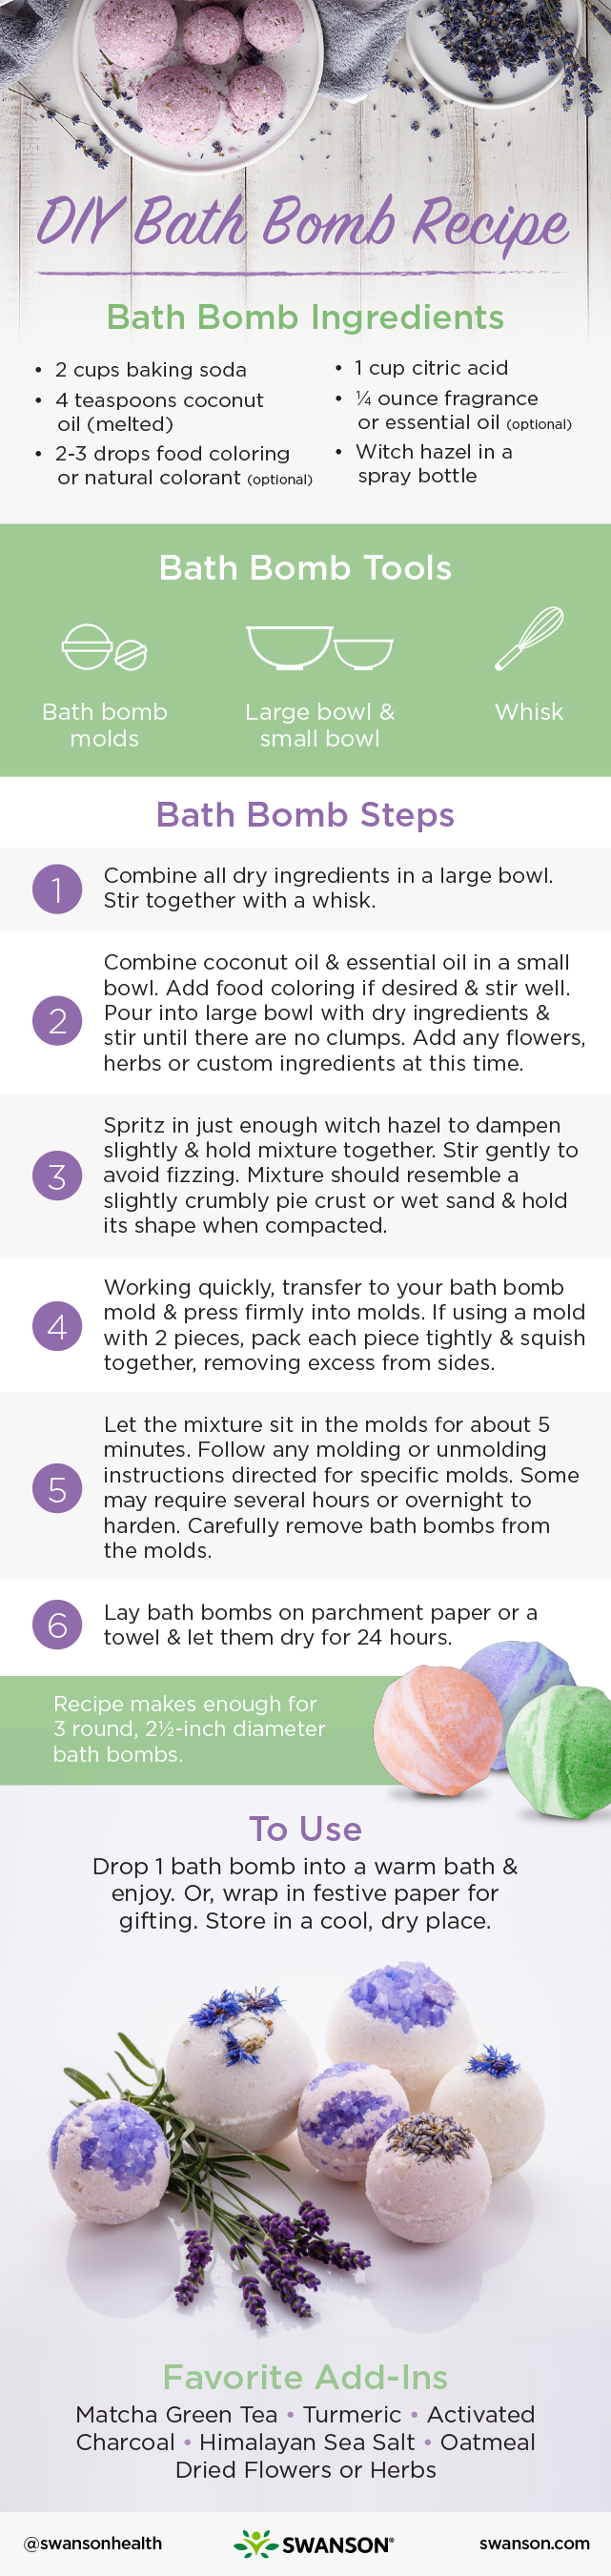 How to Make Bath Bombs - DIY bath bomb recipe infographic Swanson Health